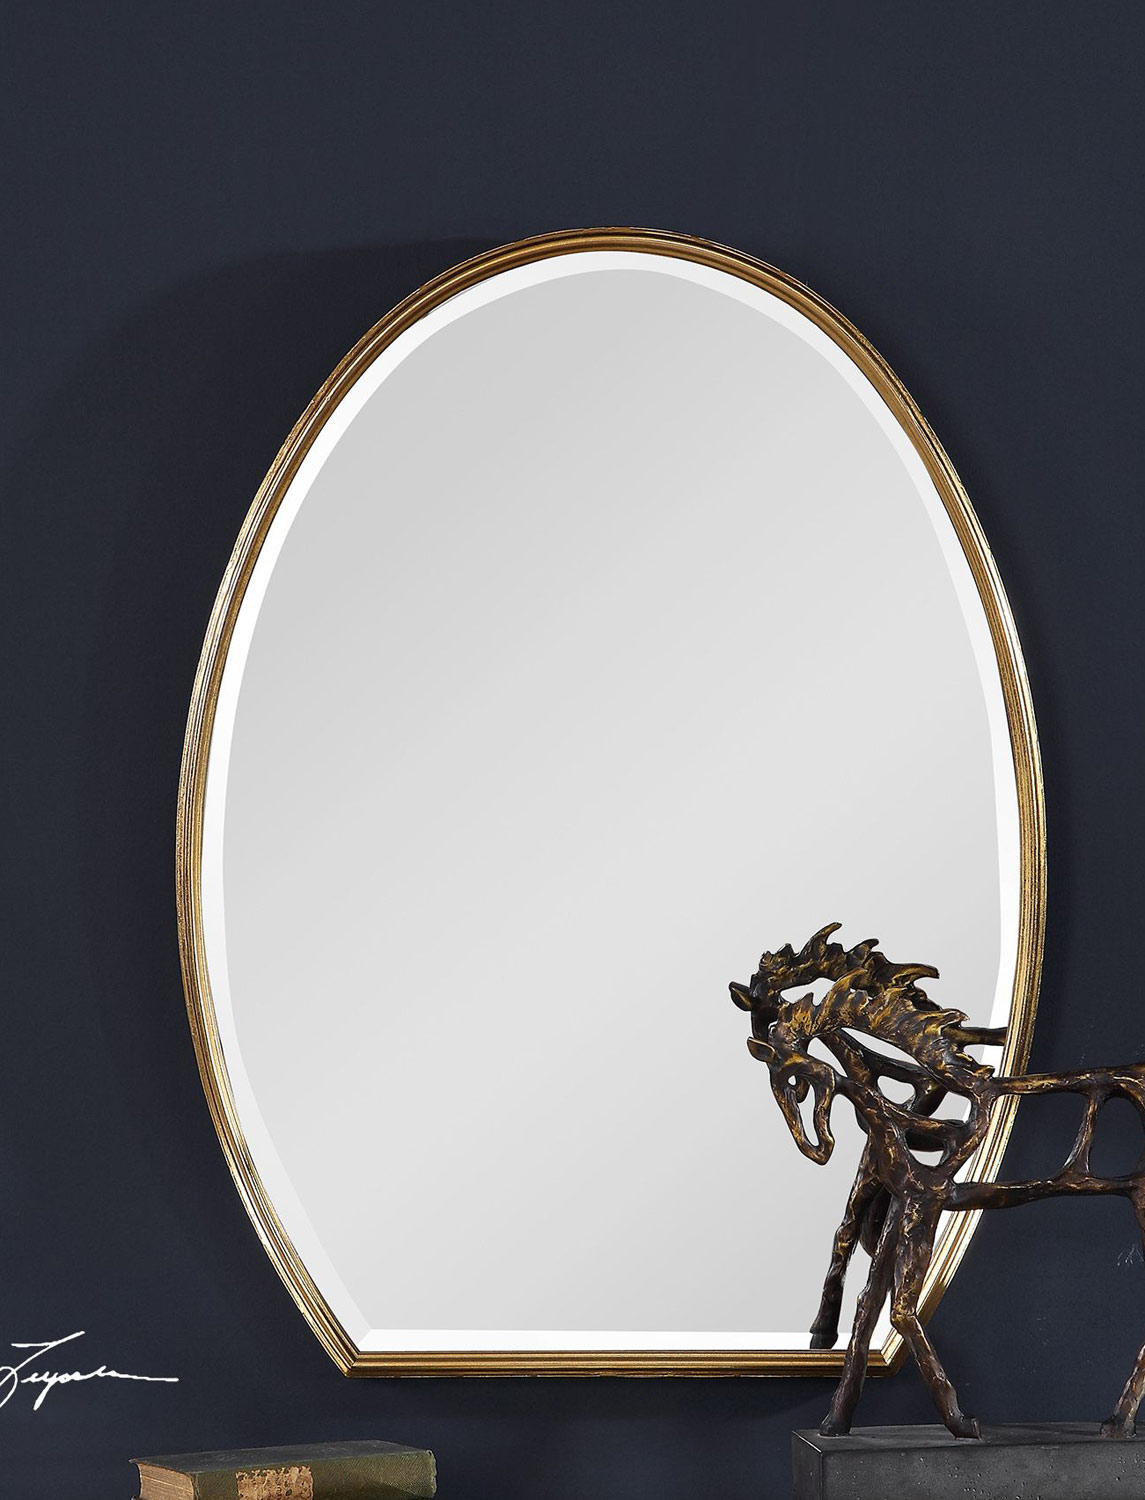 Uttermost Kenzo Modified Oval Mirror